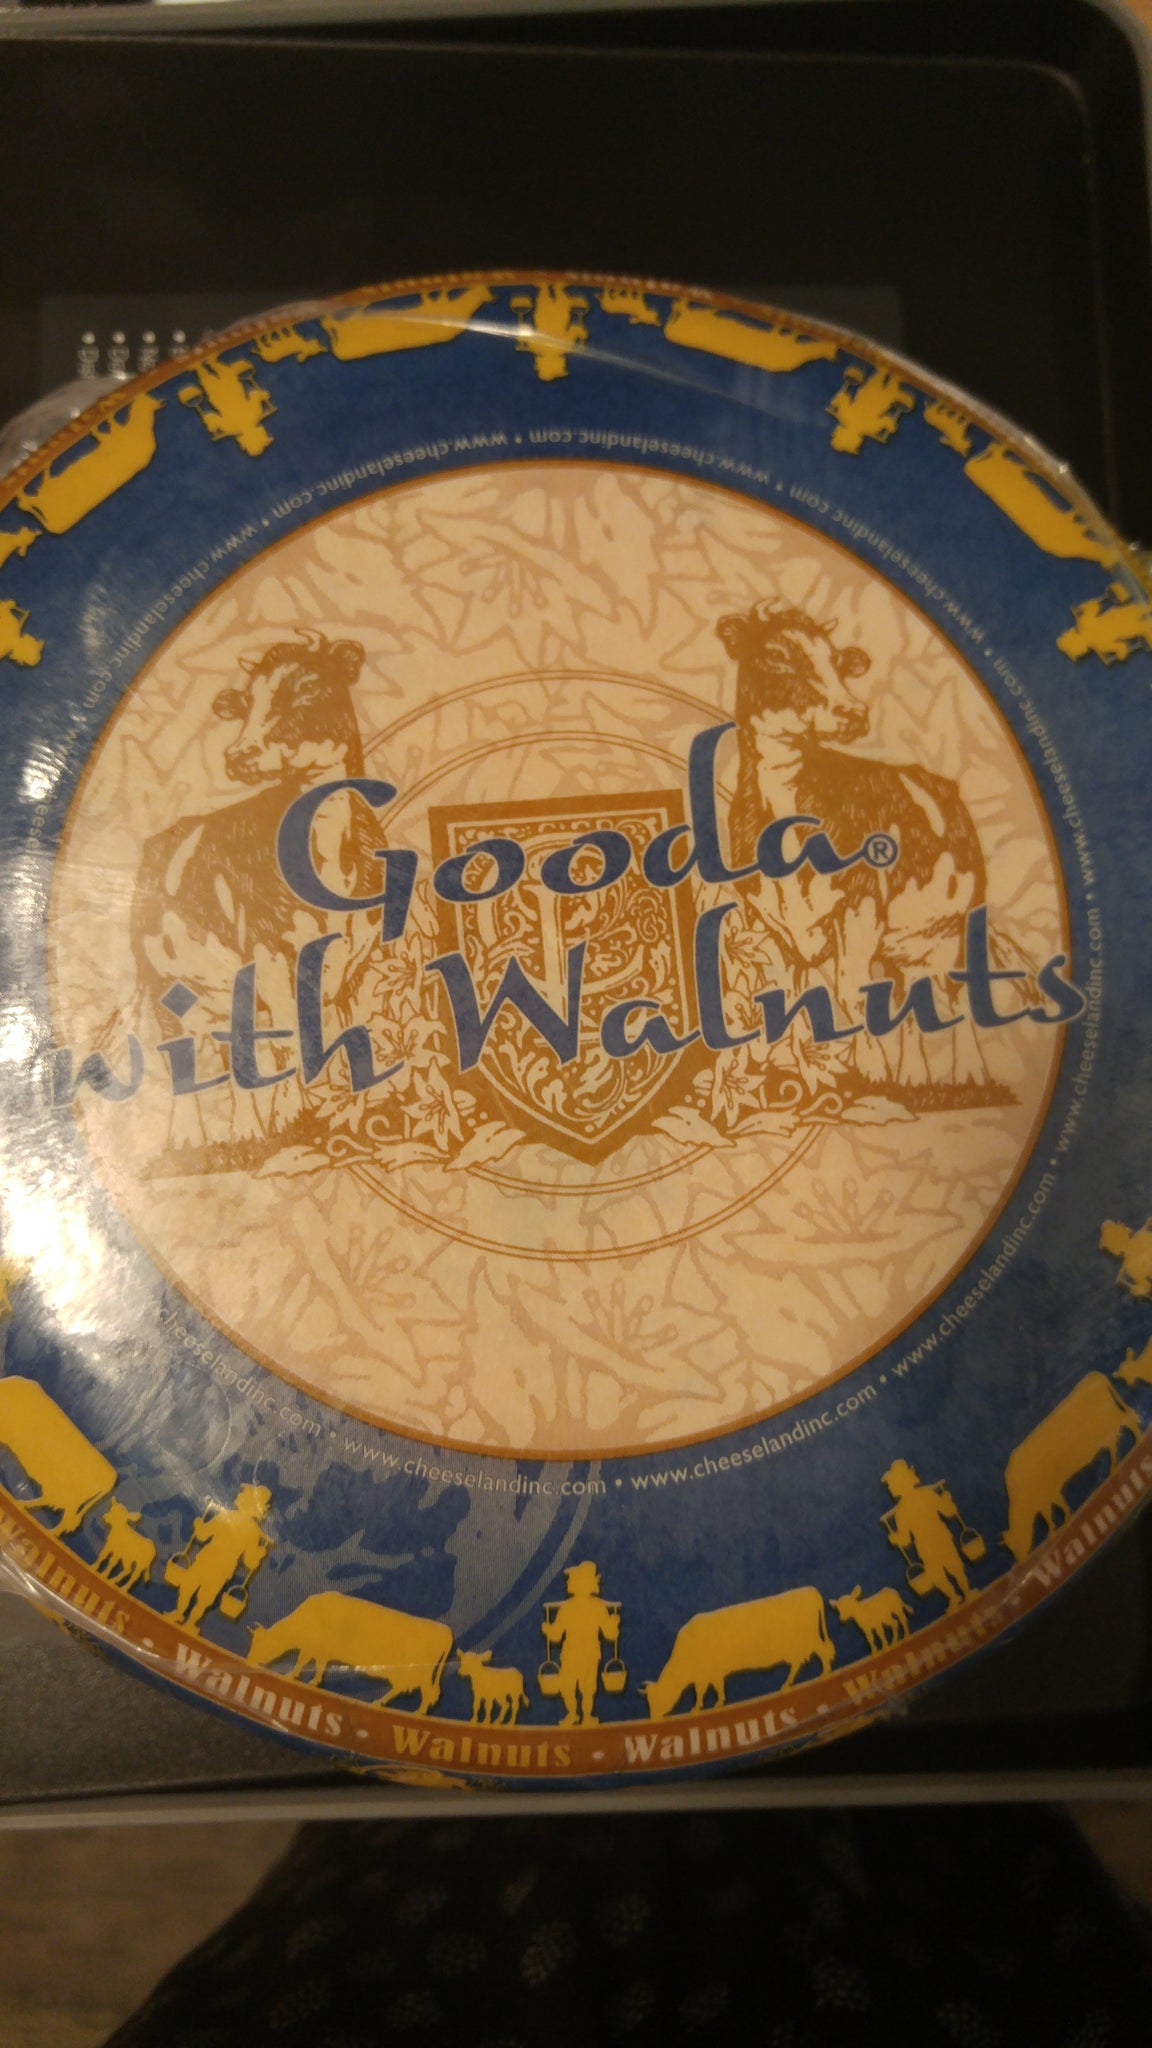 Cheese Land - Gouda - Walnut - (150g - 175g)